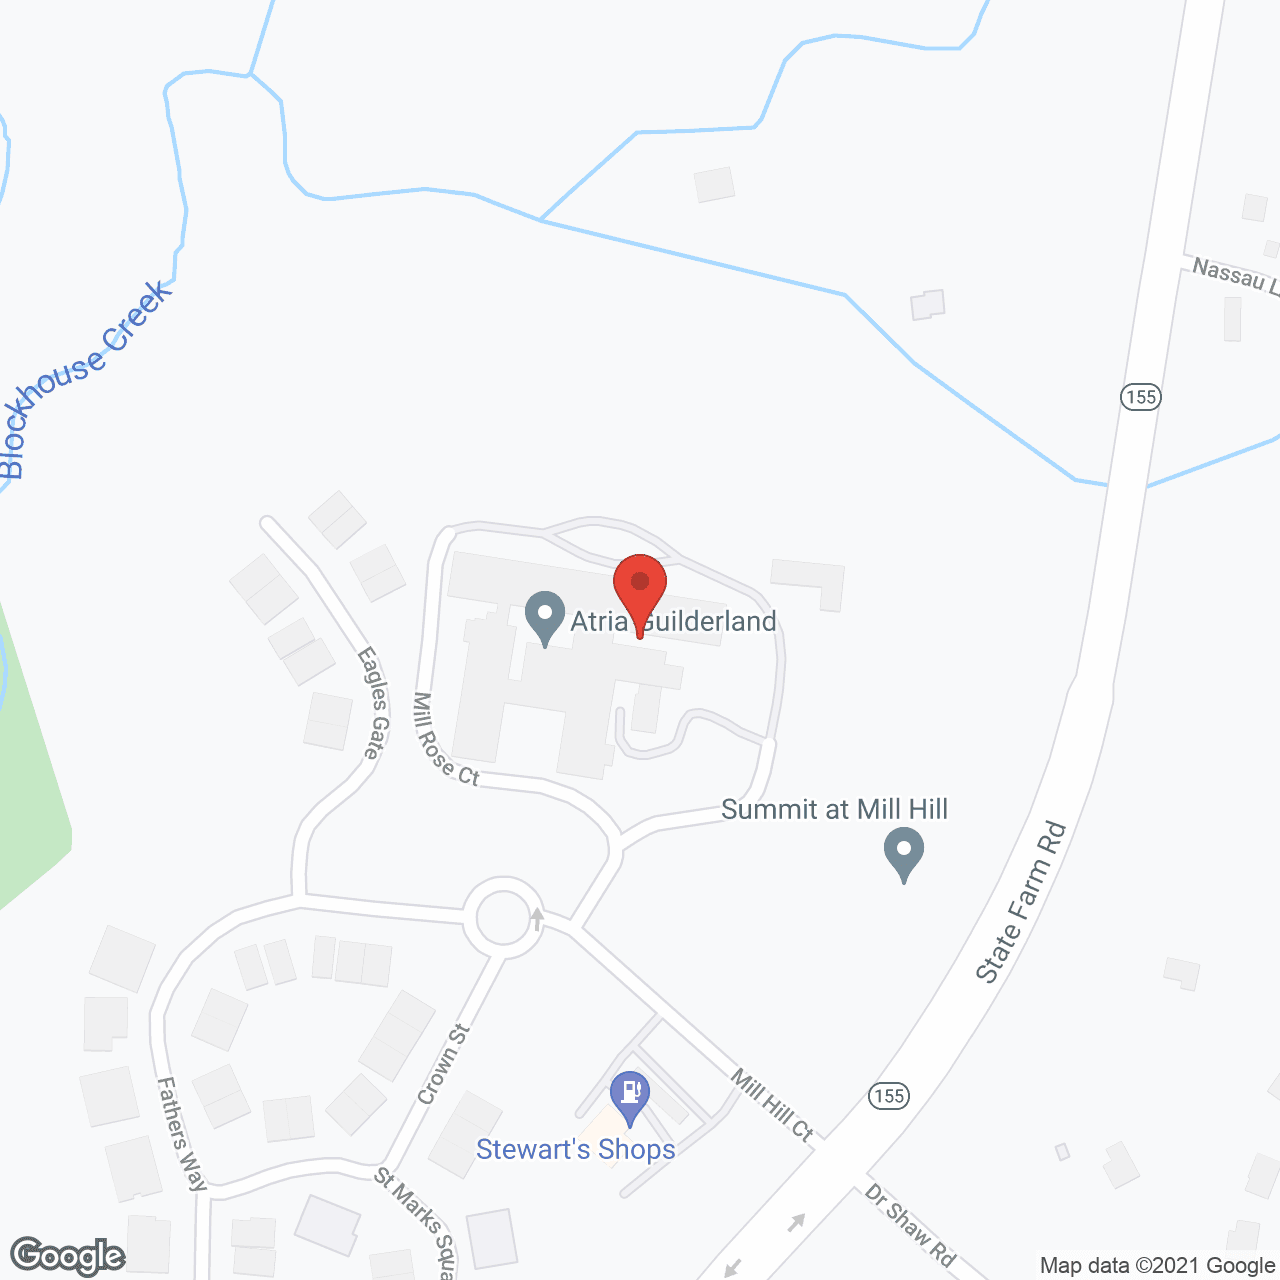 Peregrine Guilderland in google map